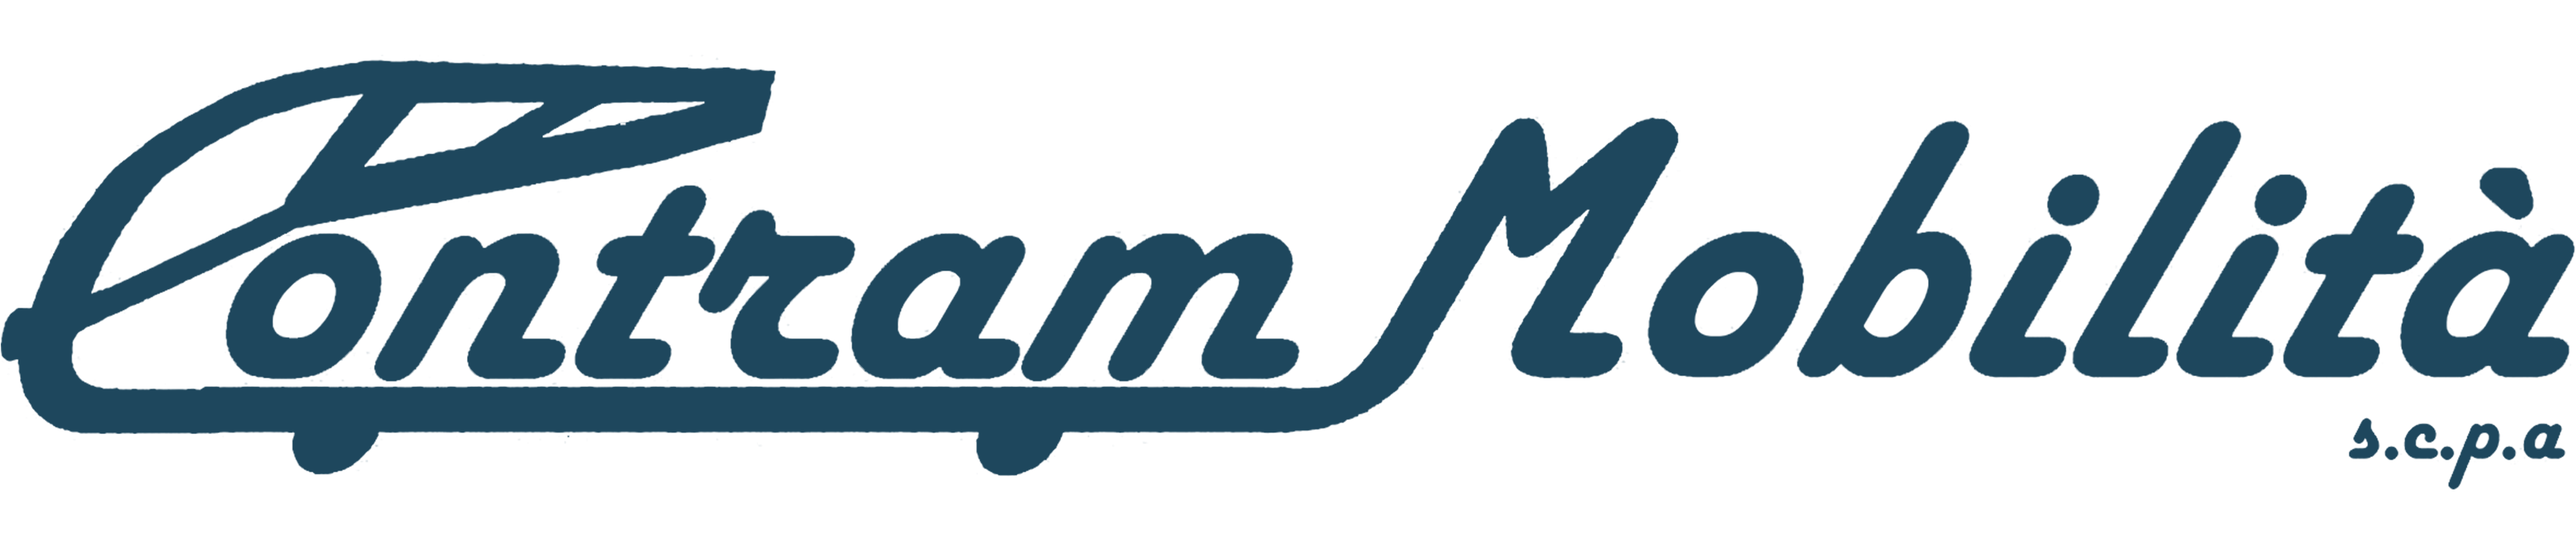 Logo_Contram_MobilitaHD